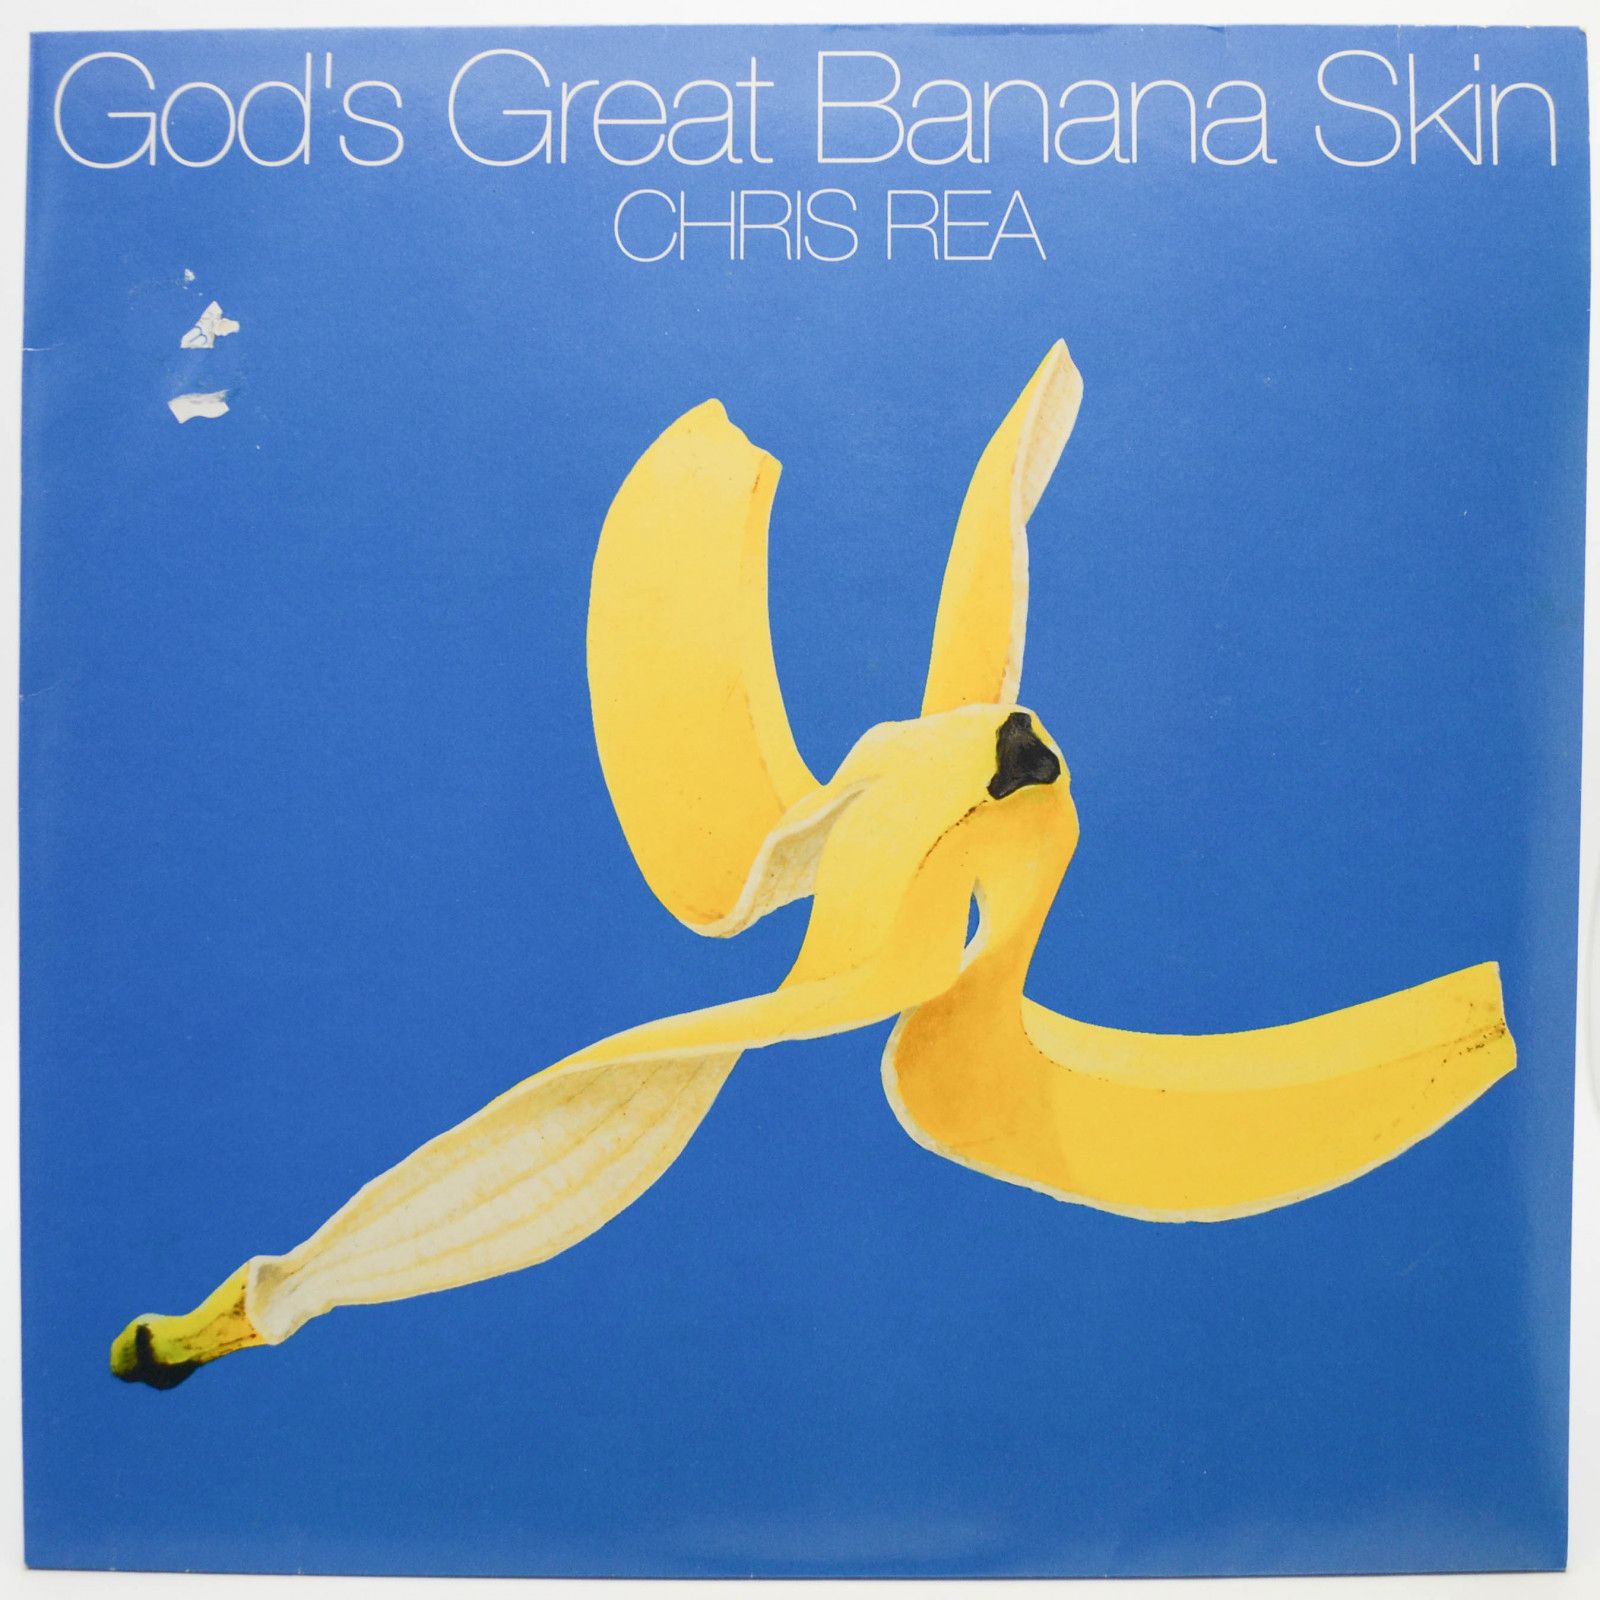 Chris Rea — God's Great Banana Skin, 1992